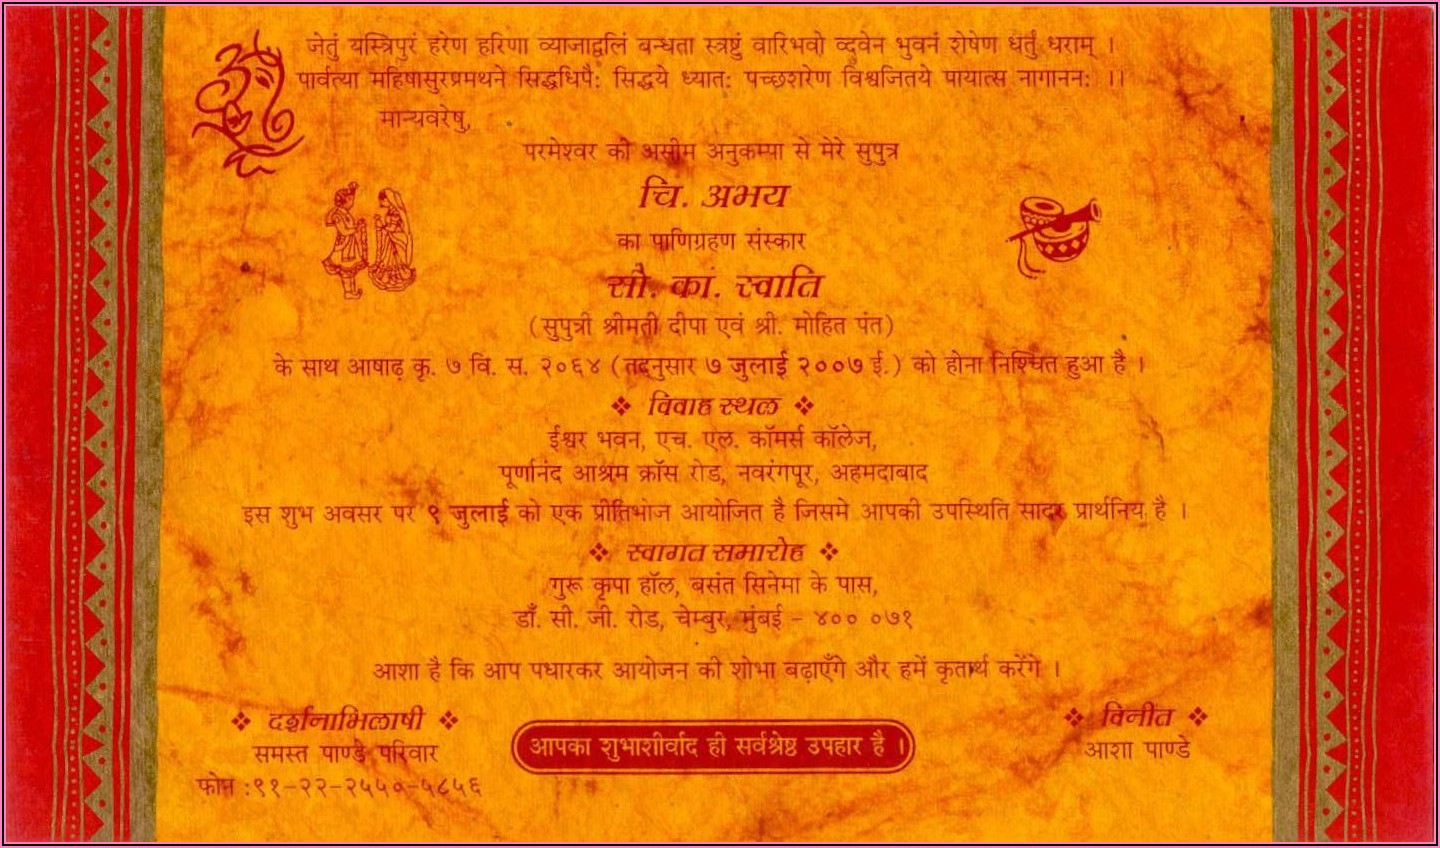 Indian Wedding Invitation Card Format In Hindi